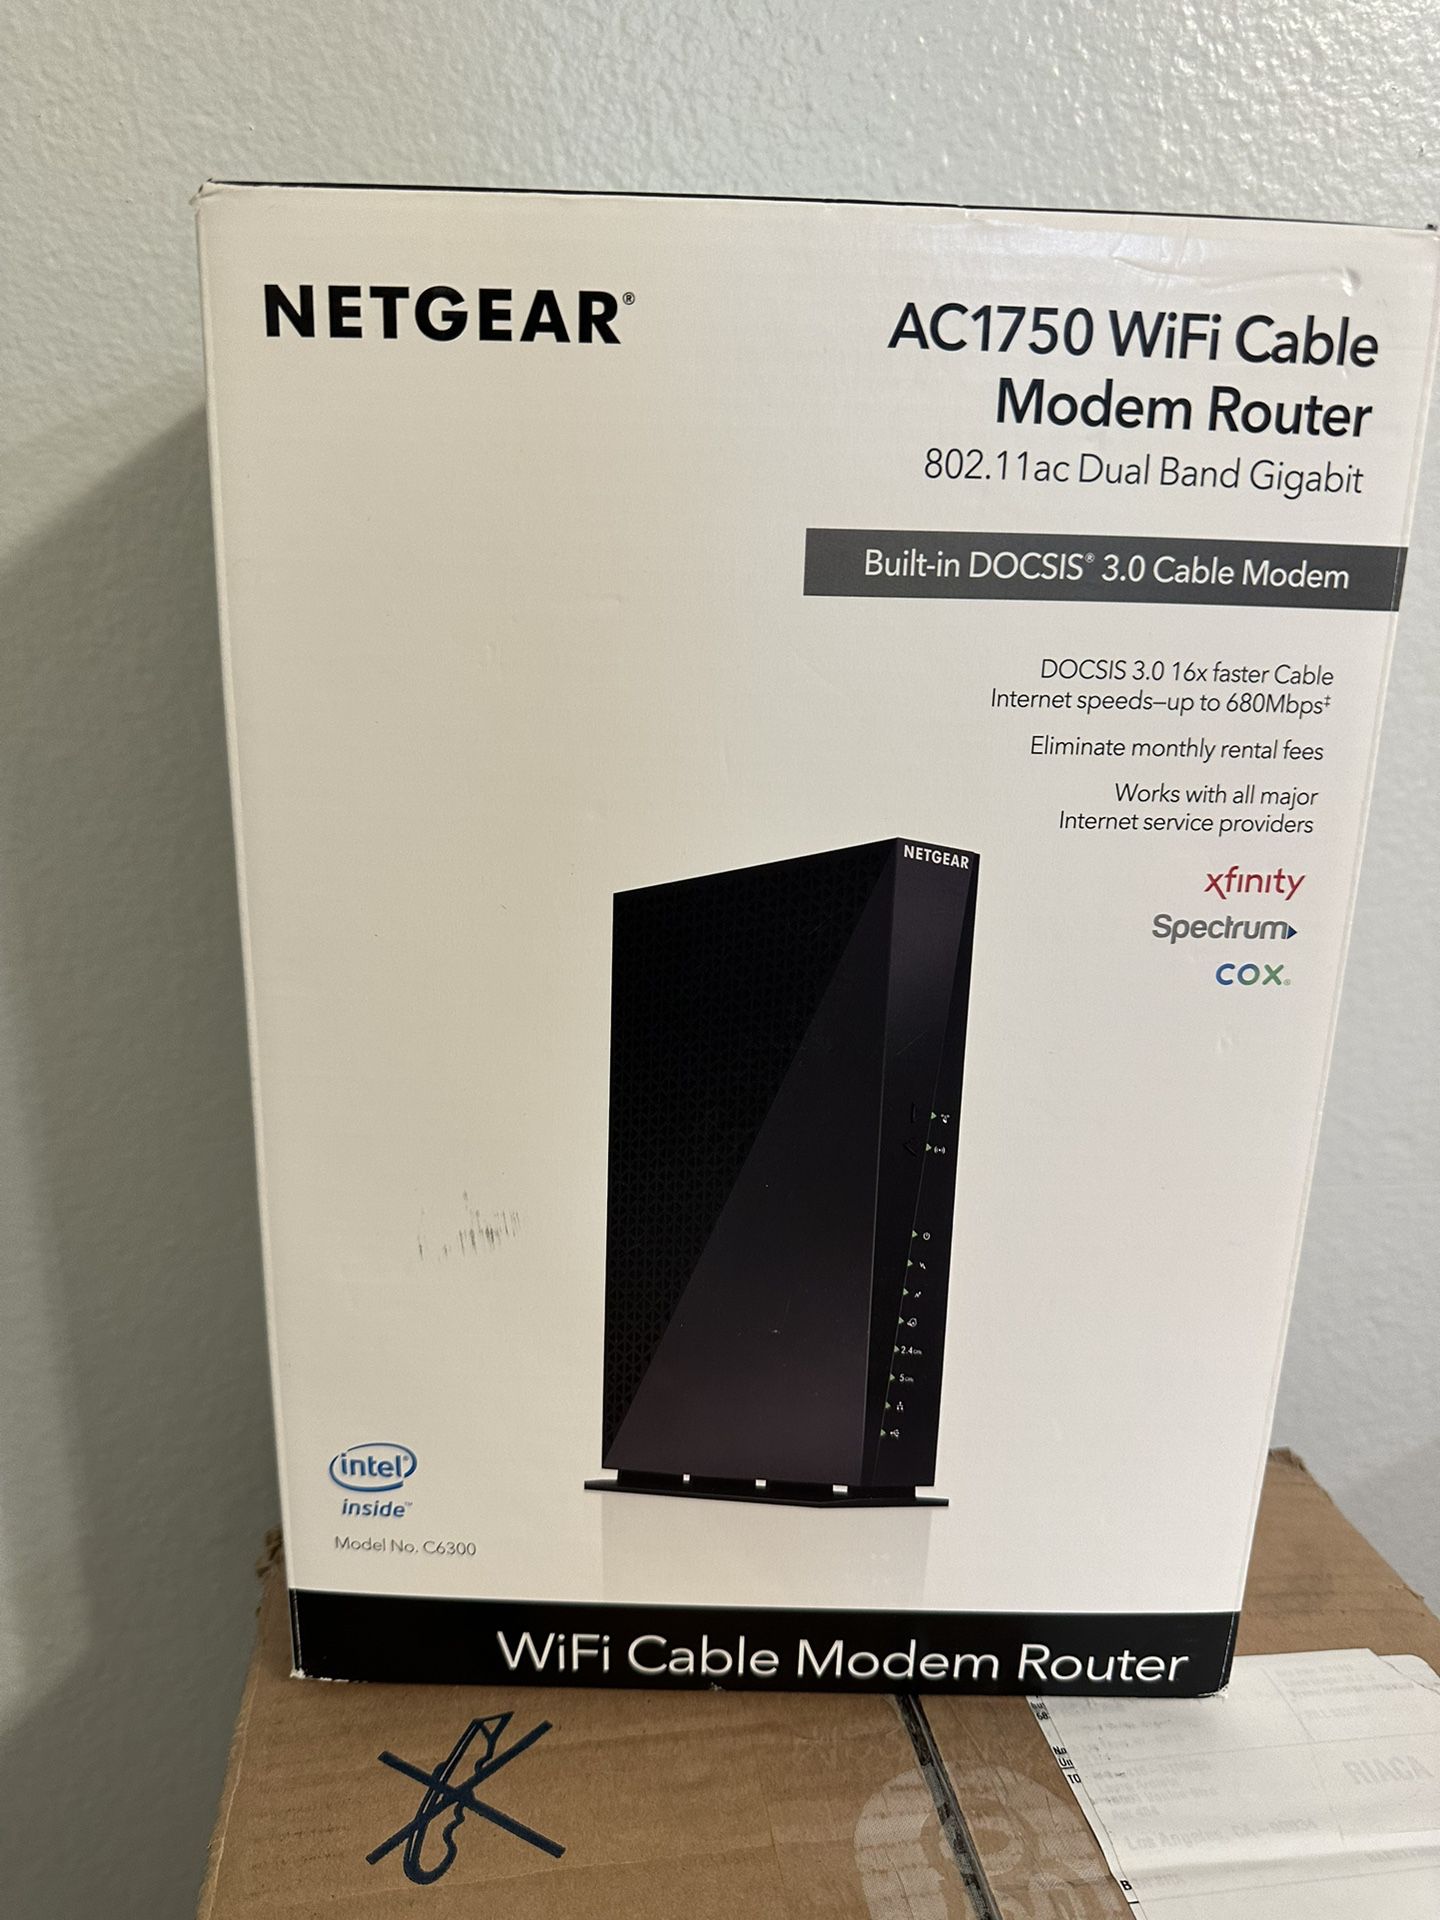 Net gear AC 1750 Wi-Fi Cable Modem